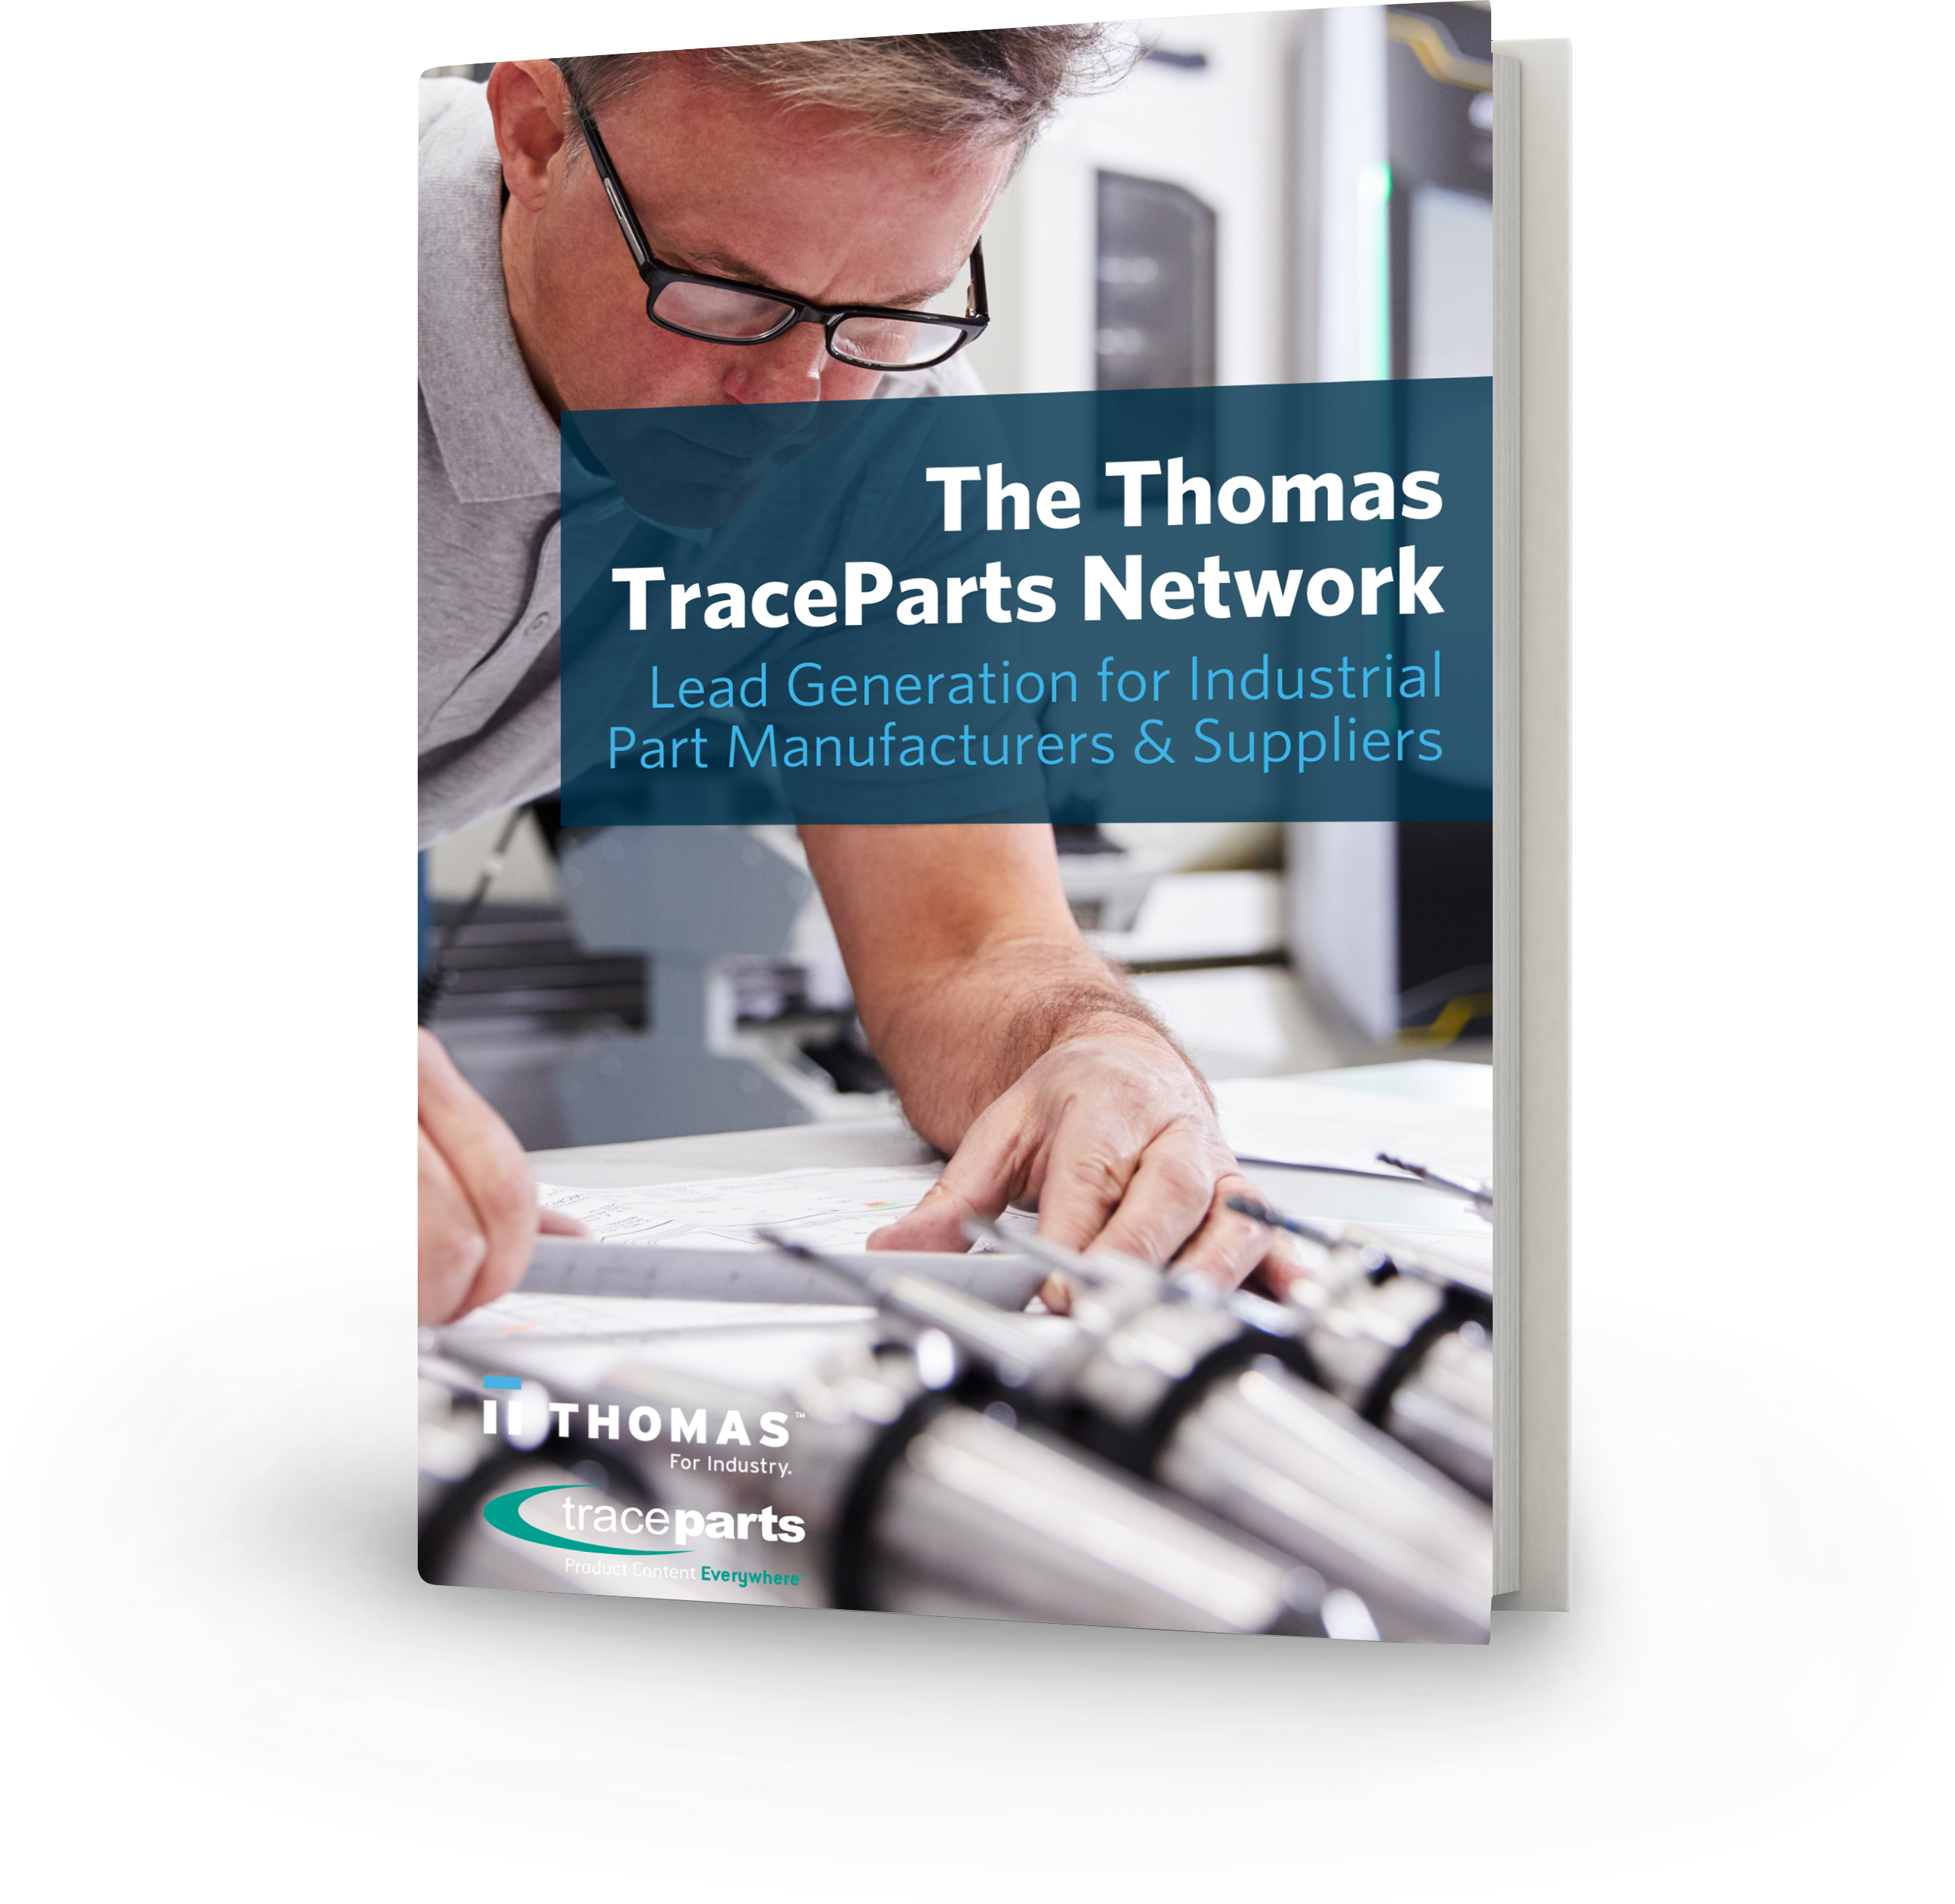 The Thomas TraceParts Network